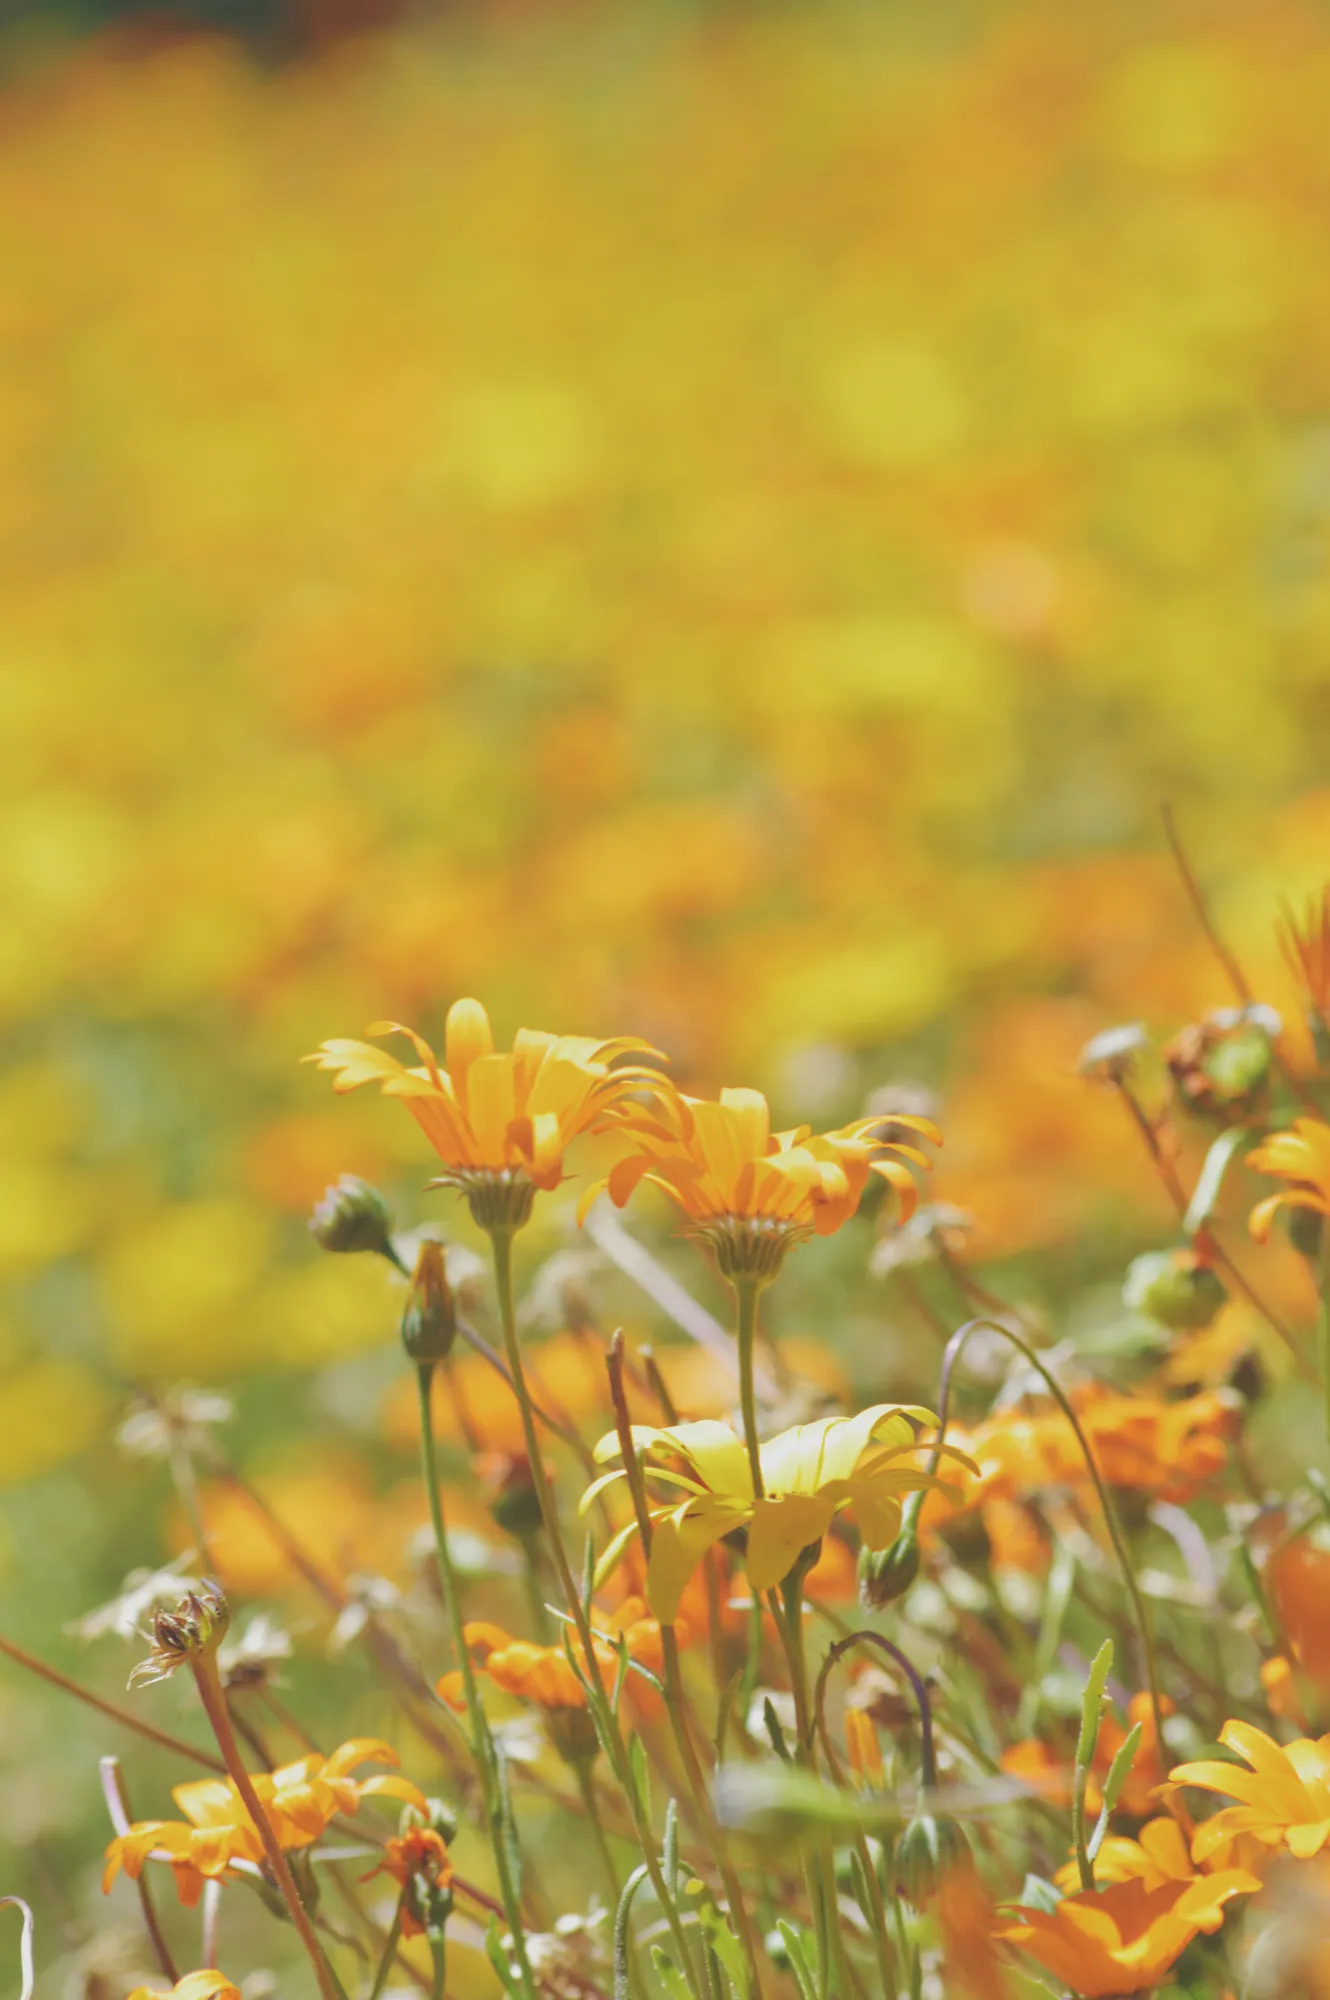 2021-10-09 - Walter Sisulu National Botanical Gardens - Yellow flowers